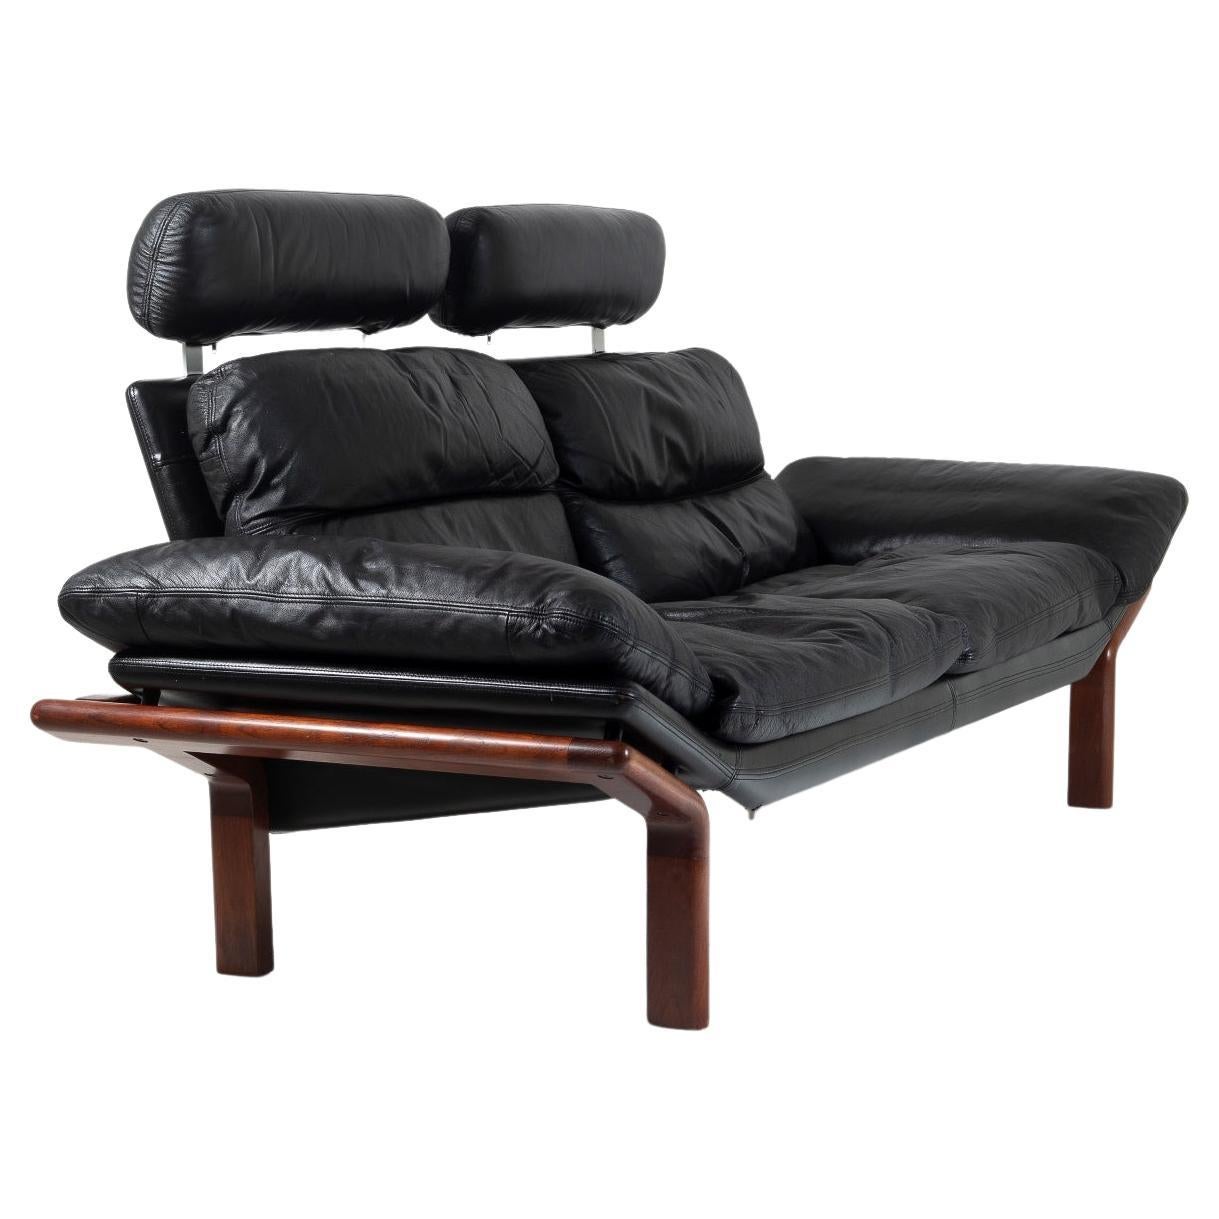 1960-70s Mid-Century Modern Danish Black Leather and Teak Sofa by Komfort For Sale